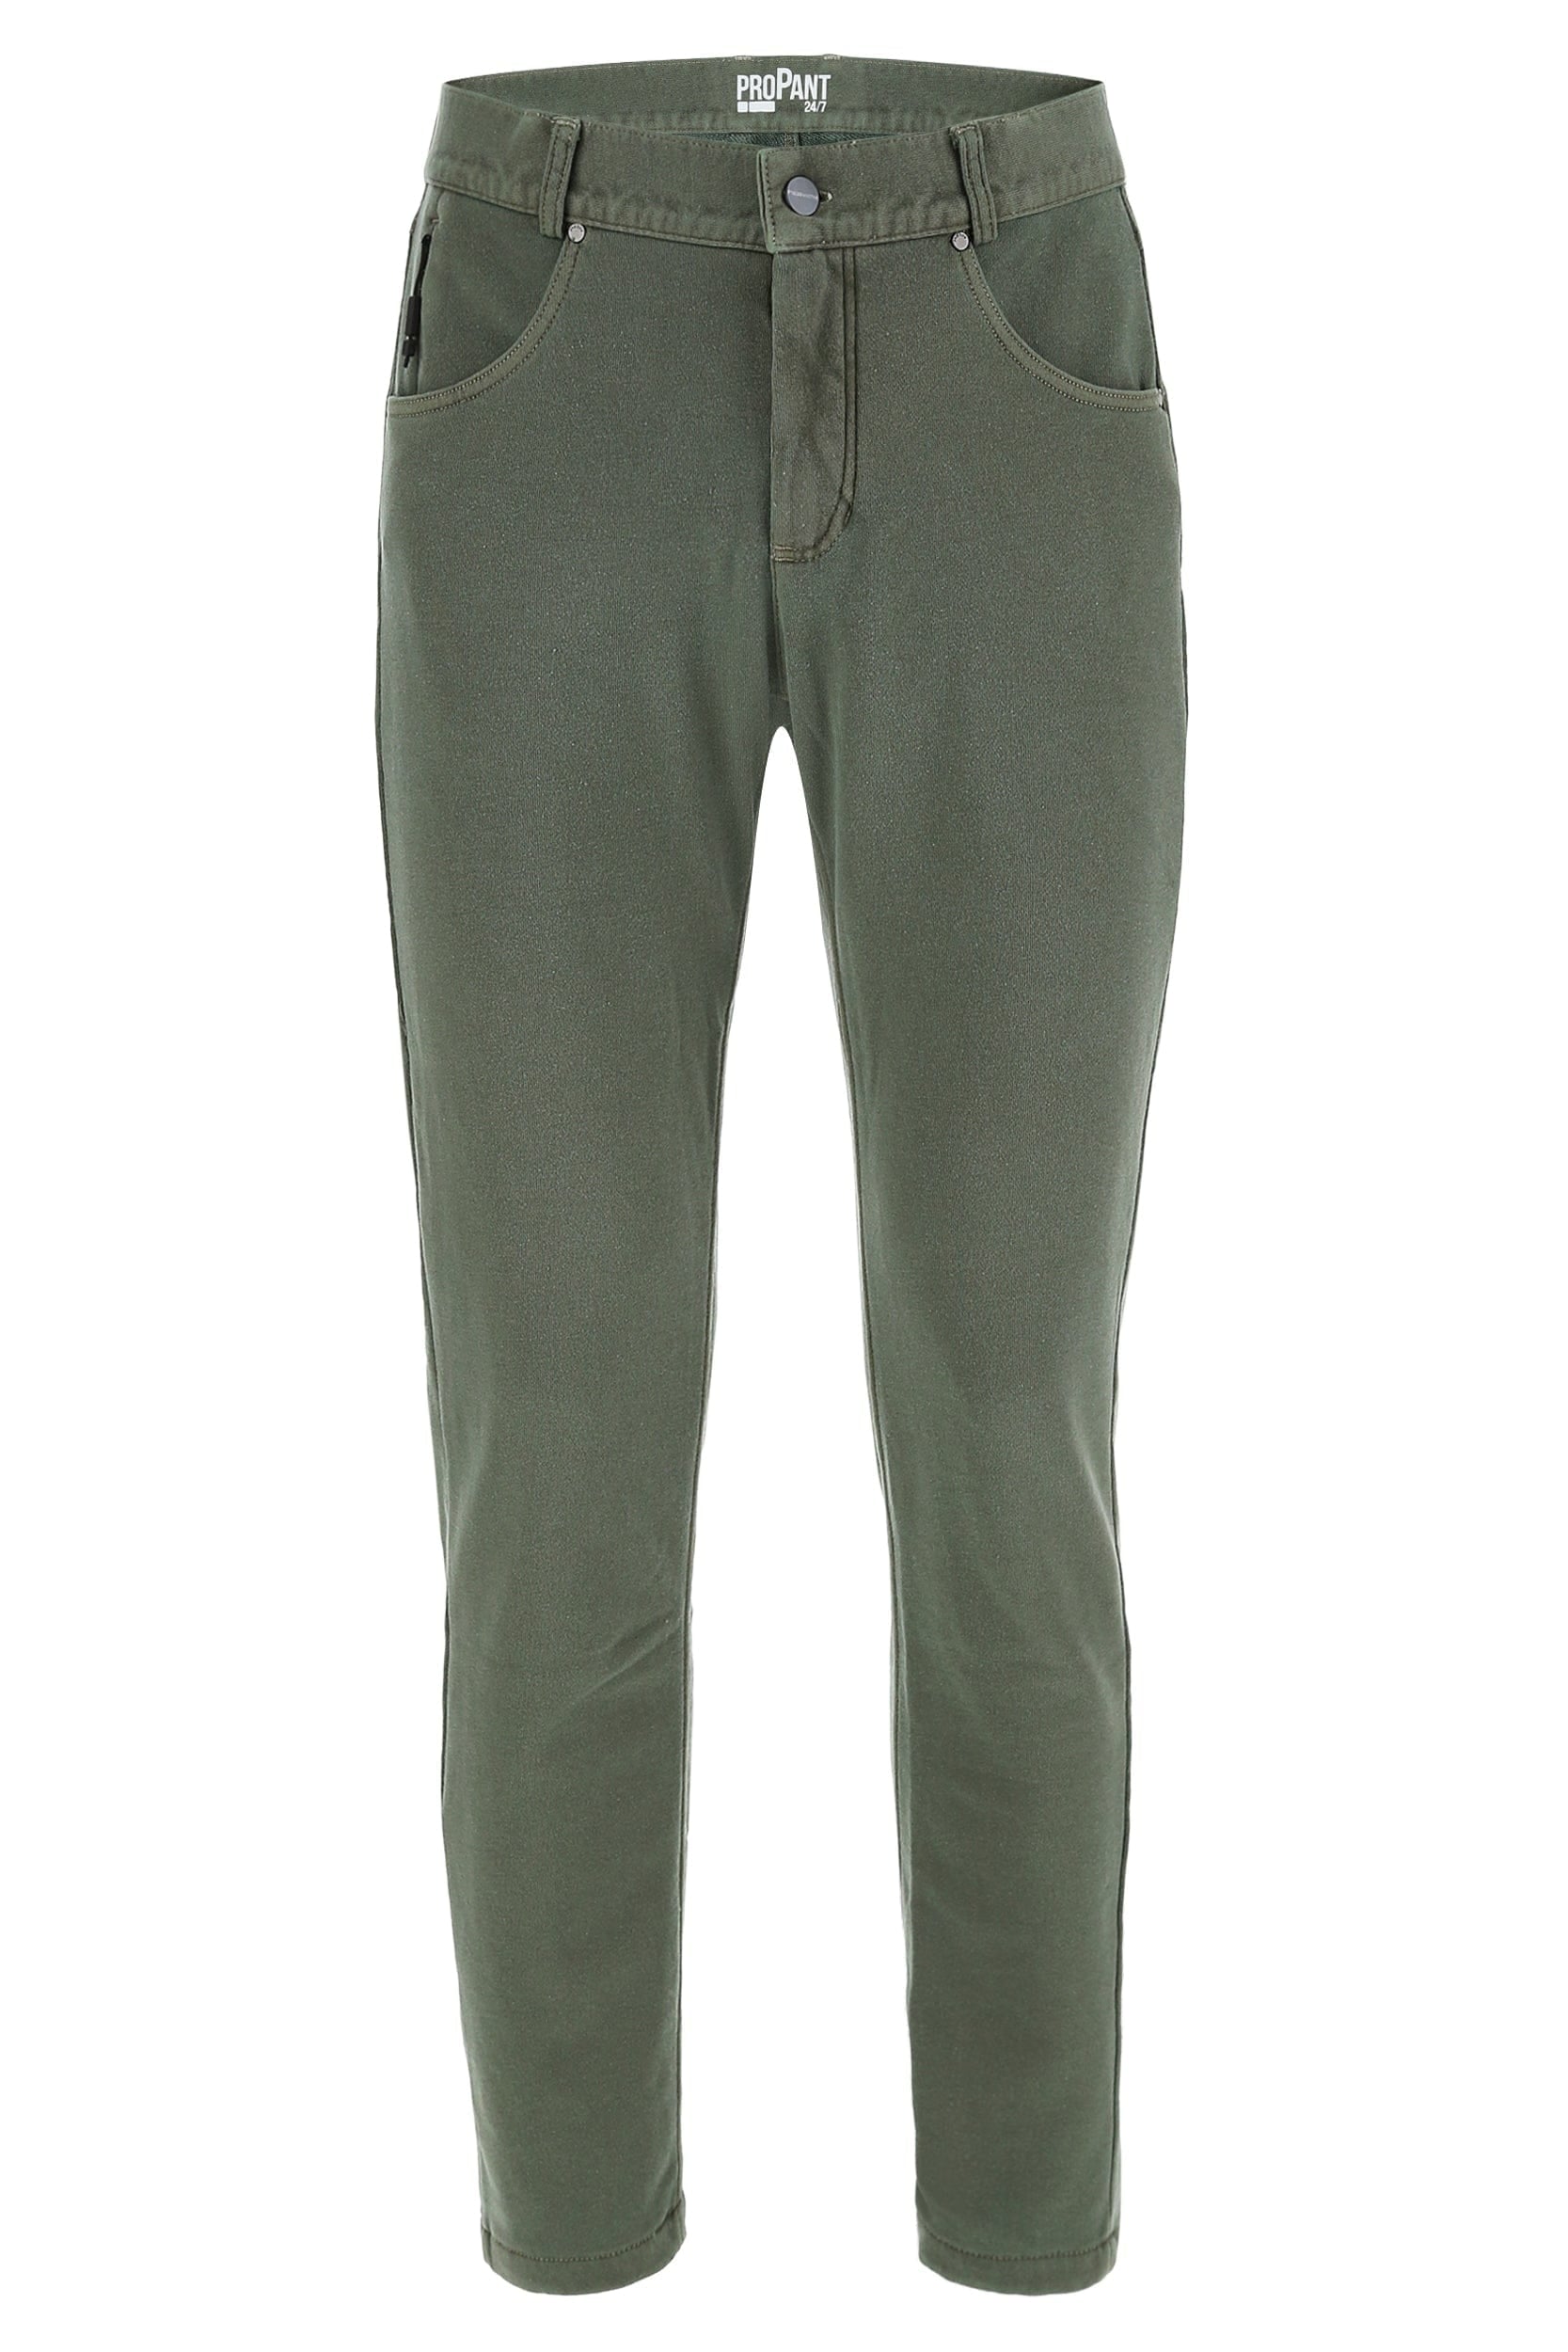 Men's Propant Chino Trouser - Garment Dyed Green 1